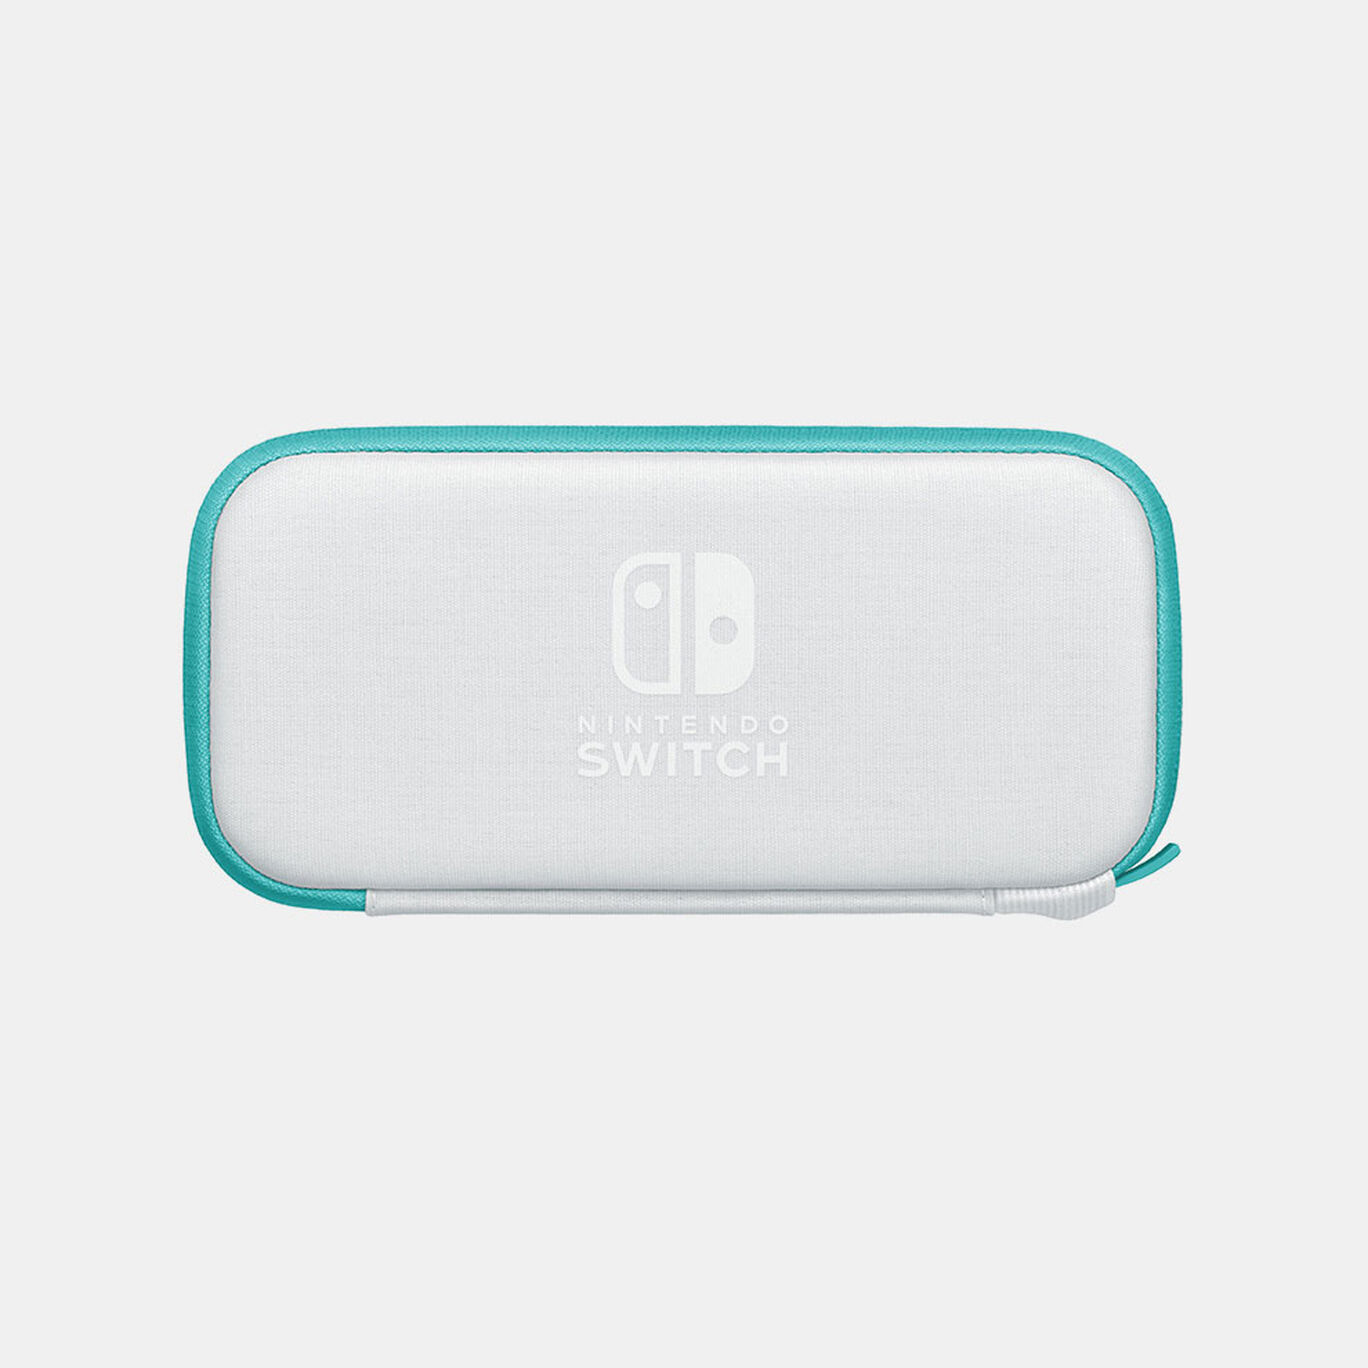 Nintendo Switch Liteキャリングケース ターコイズ 画面保護シート付き My Nintendo Store マイニンテンドー ストア